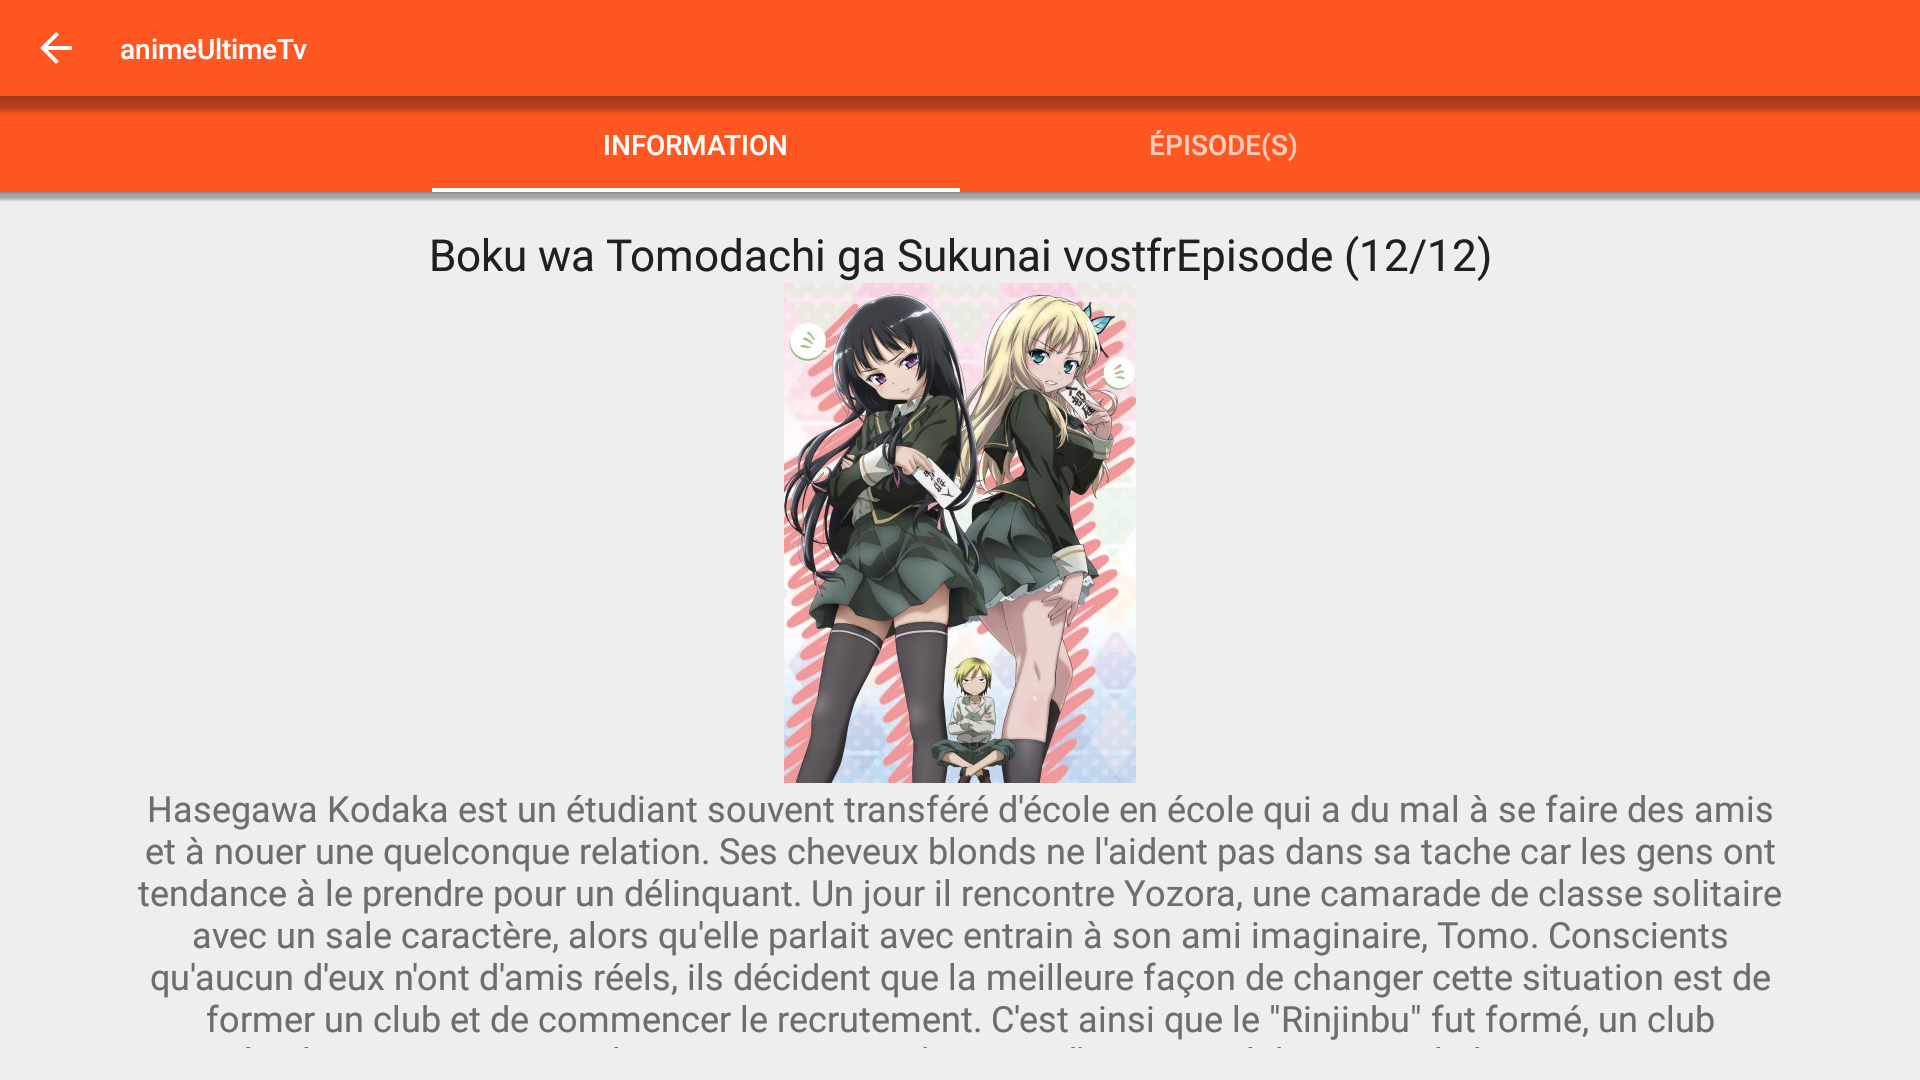 GitHub - amarullz/AnimeTV: Watch Anime in Your AndroidTV